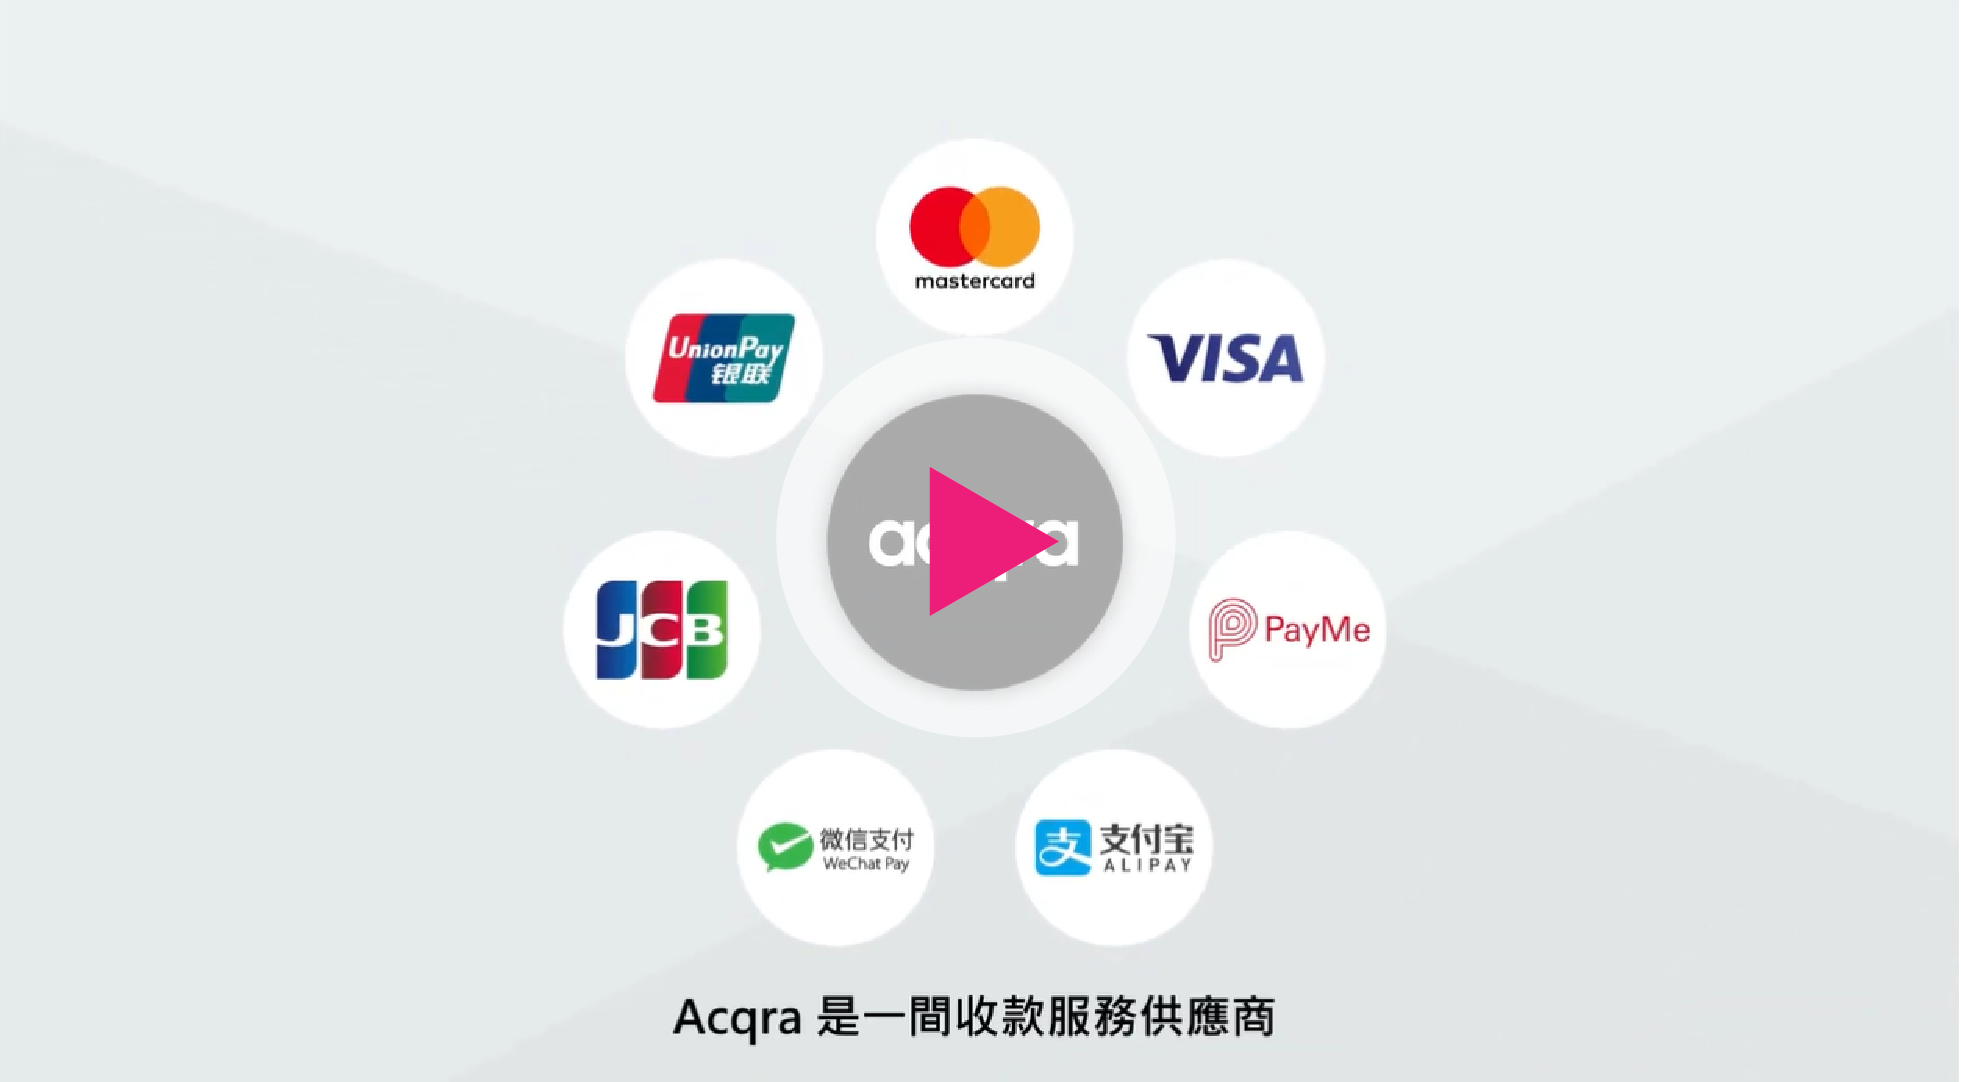 Acqra service introduction short video